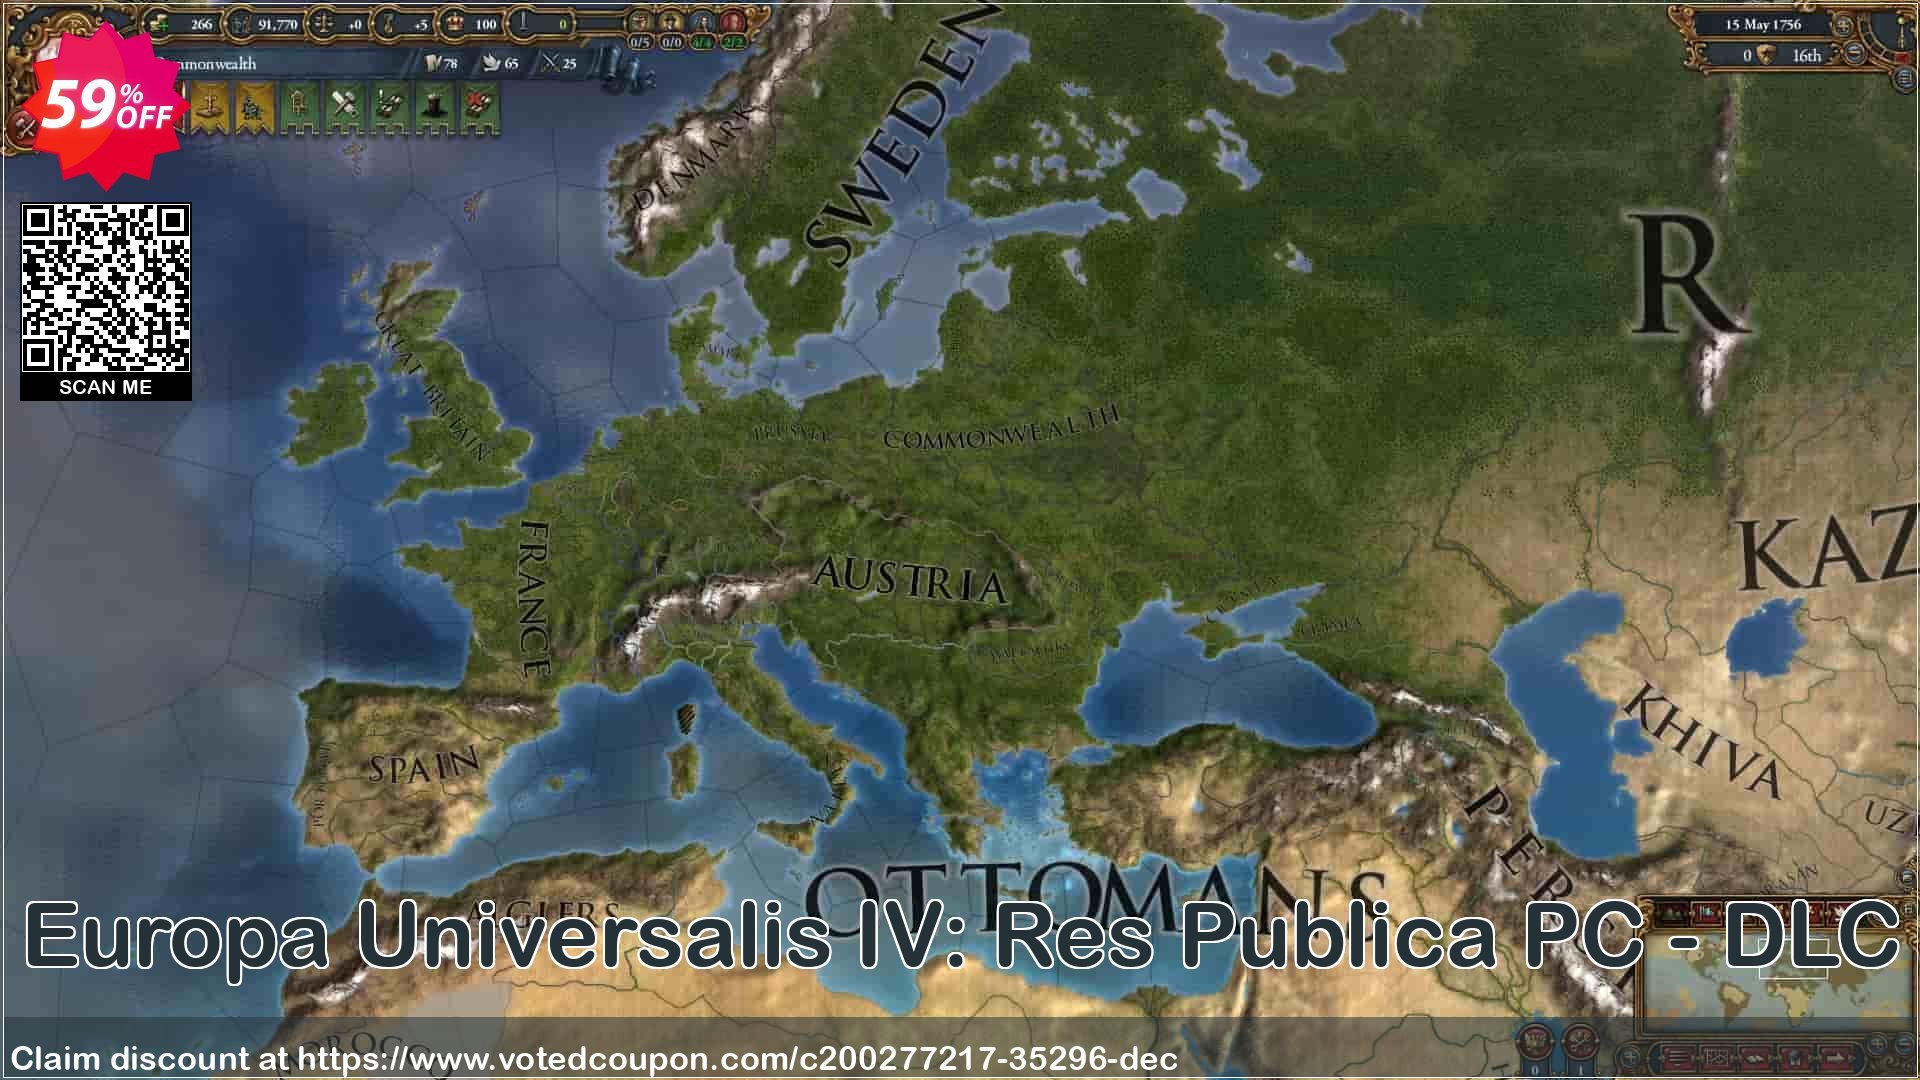 Europa Universalis IV: Res Publica PC - DLC Coupon Code Apr 2024, 59% OFF - VotedCoupon